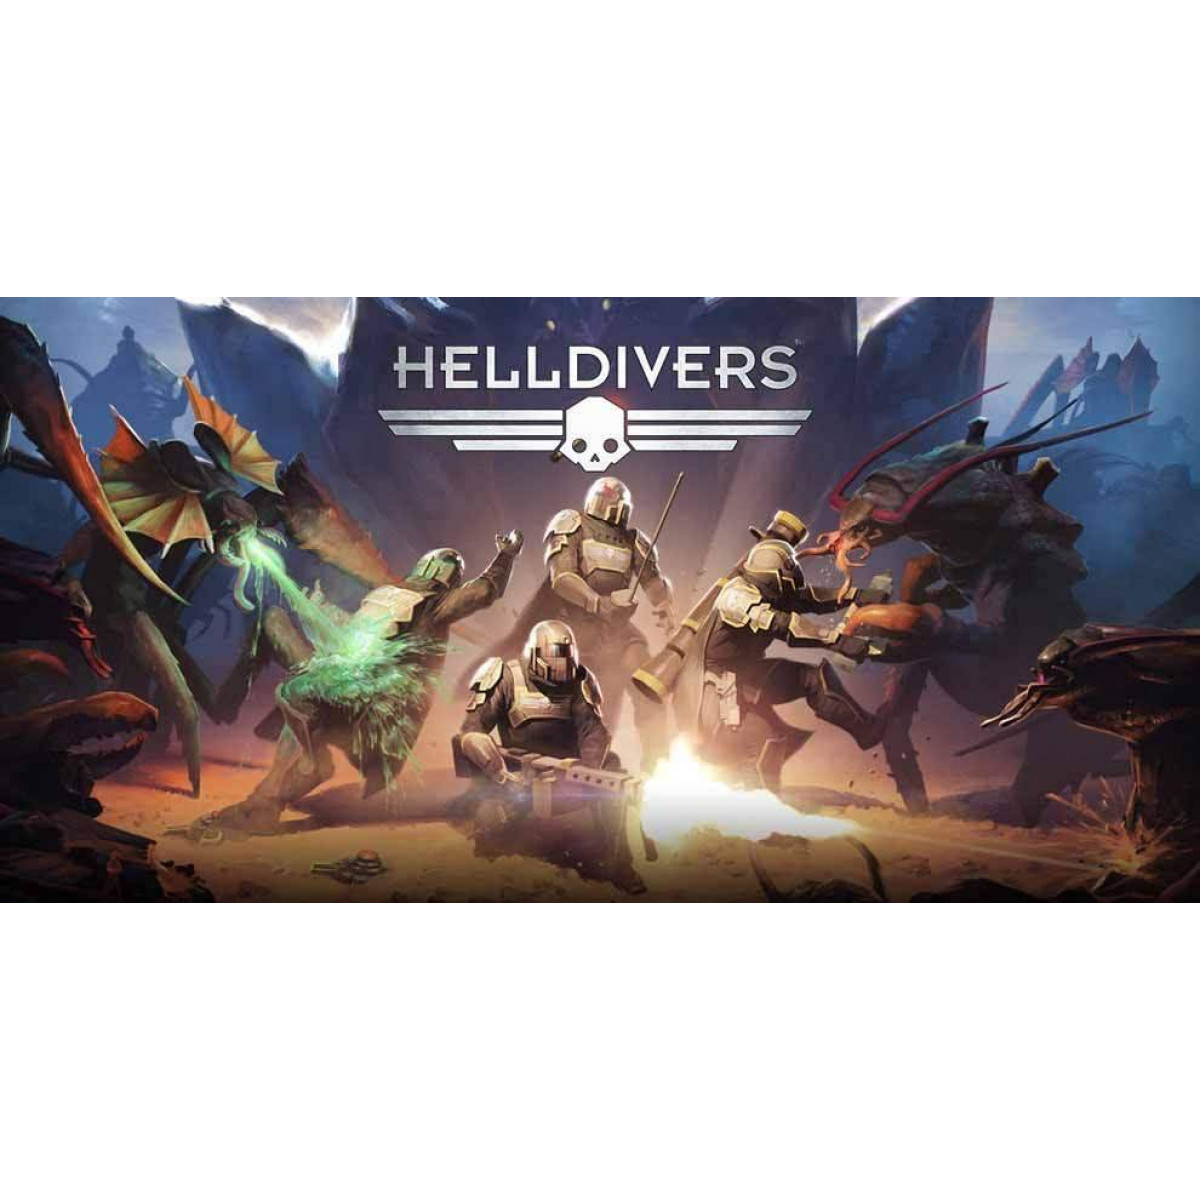 DLC Helldivers 2. Helldivers 1. Helldivers персонажи арт. Helldivers геймплей. Helldivers game pass